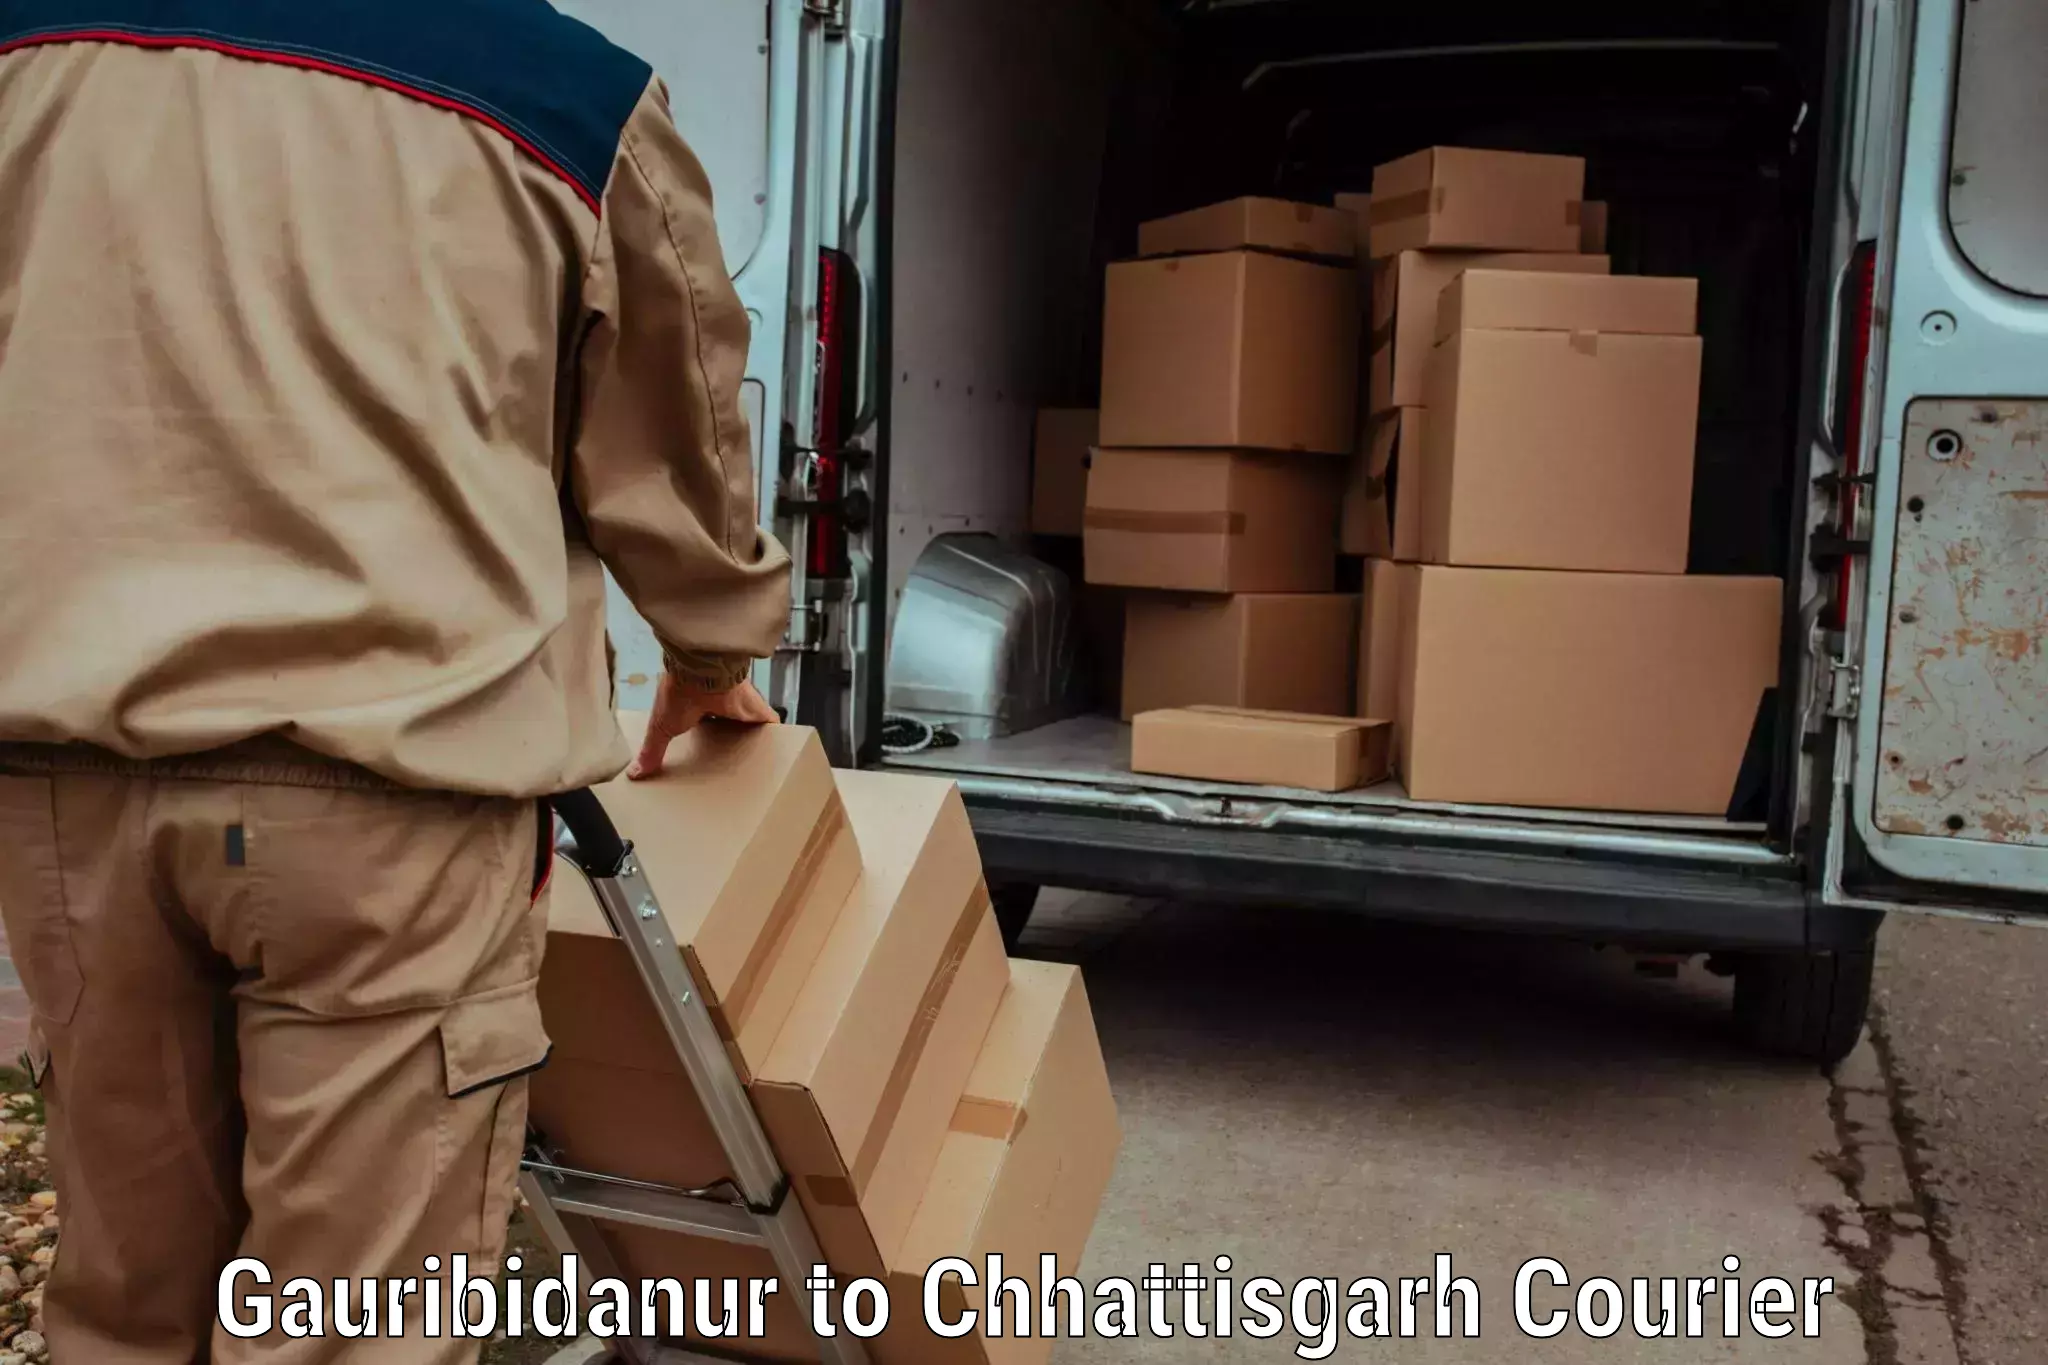 Global courier networks Gauribidanur to Narayanpur